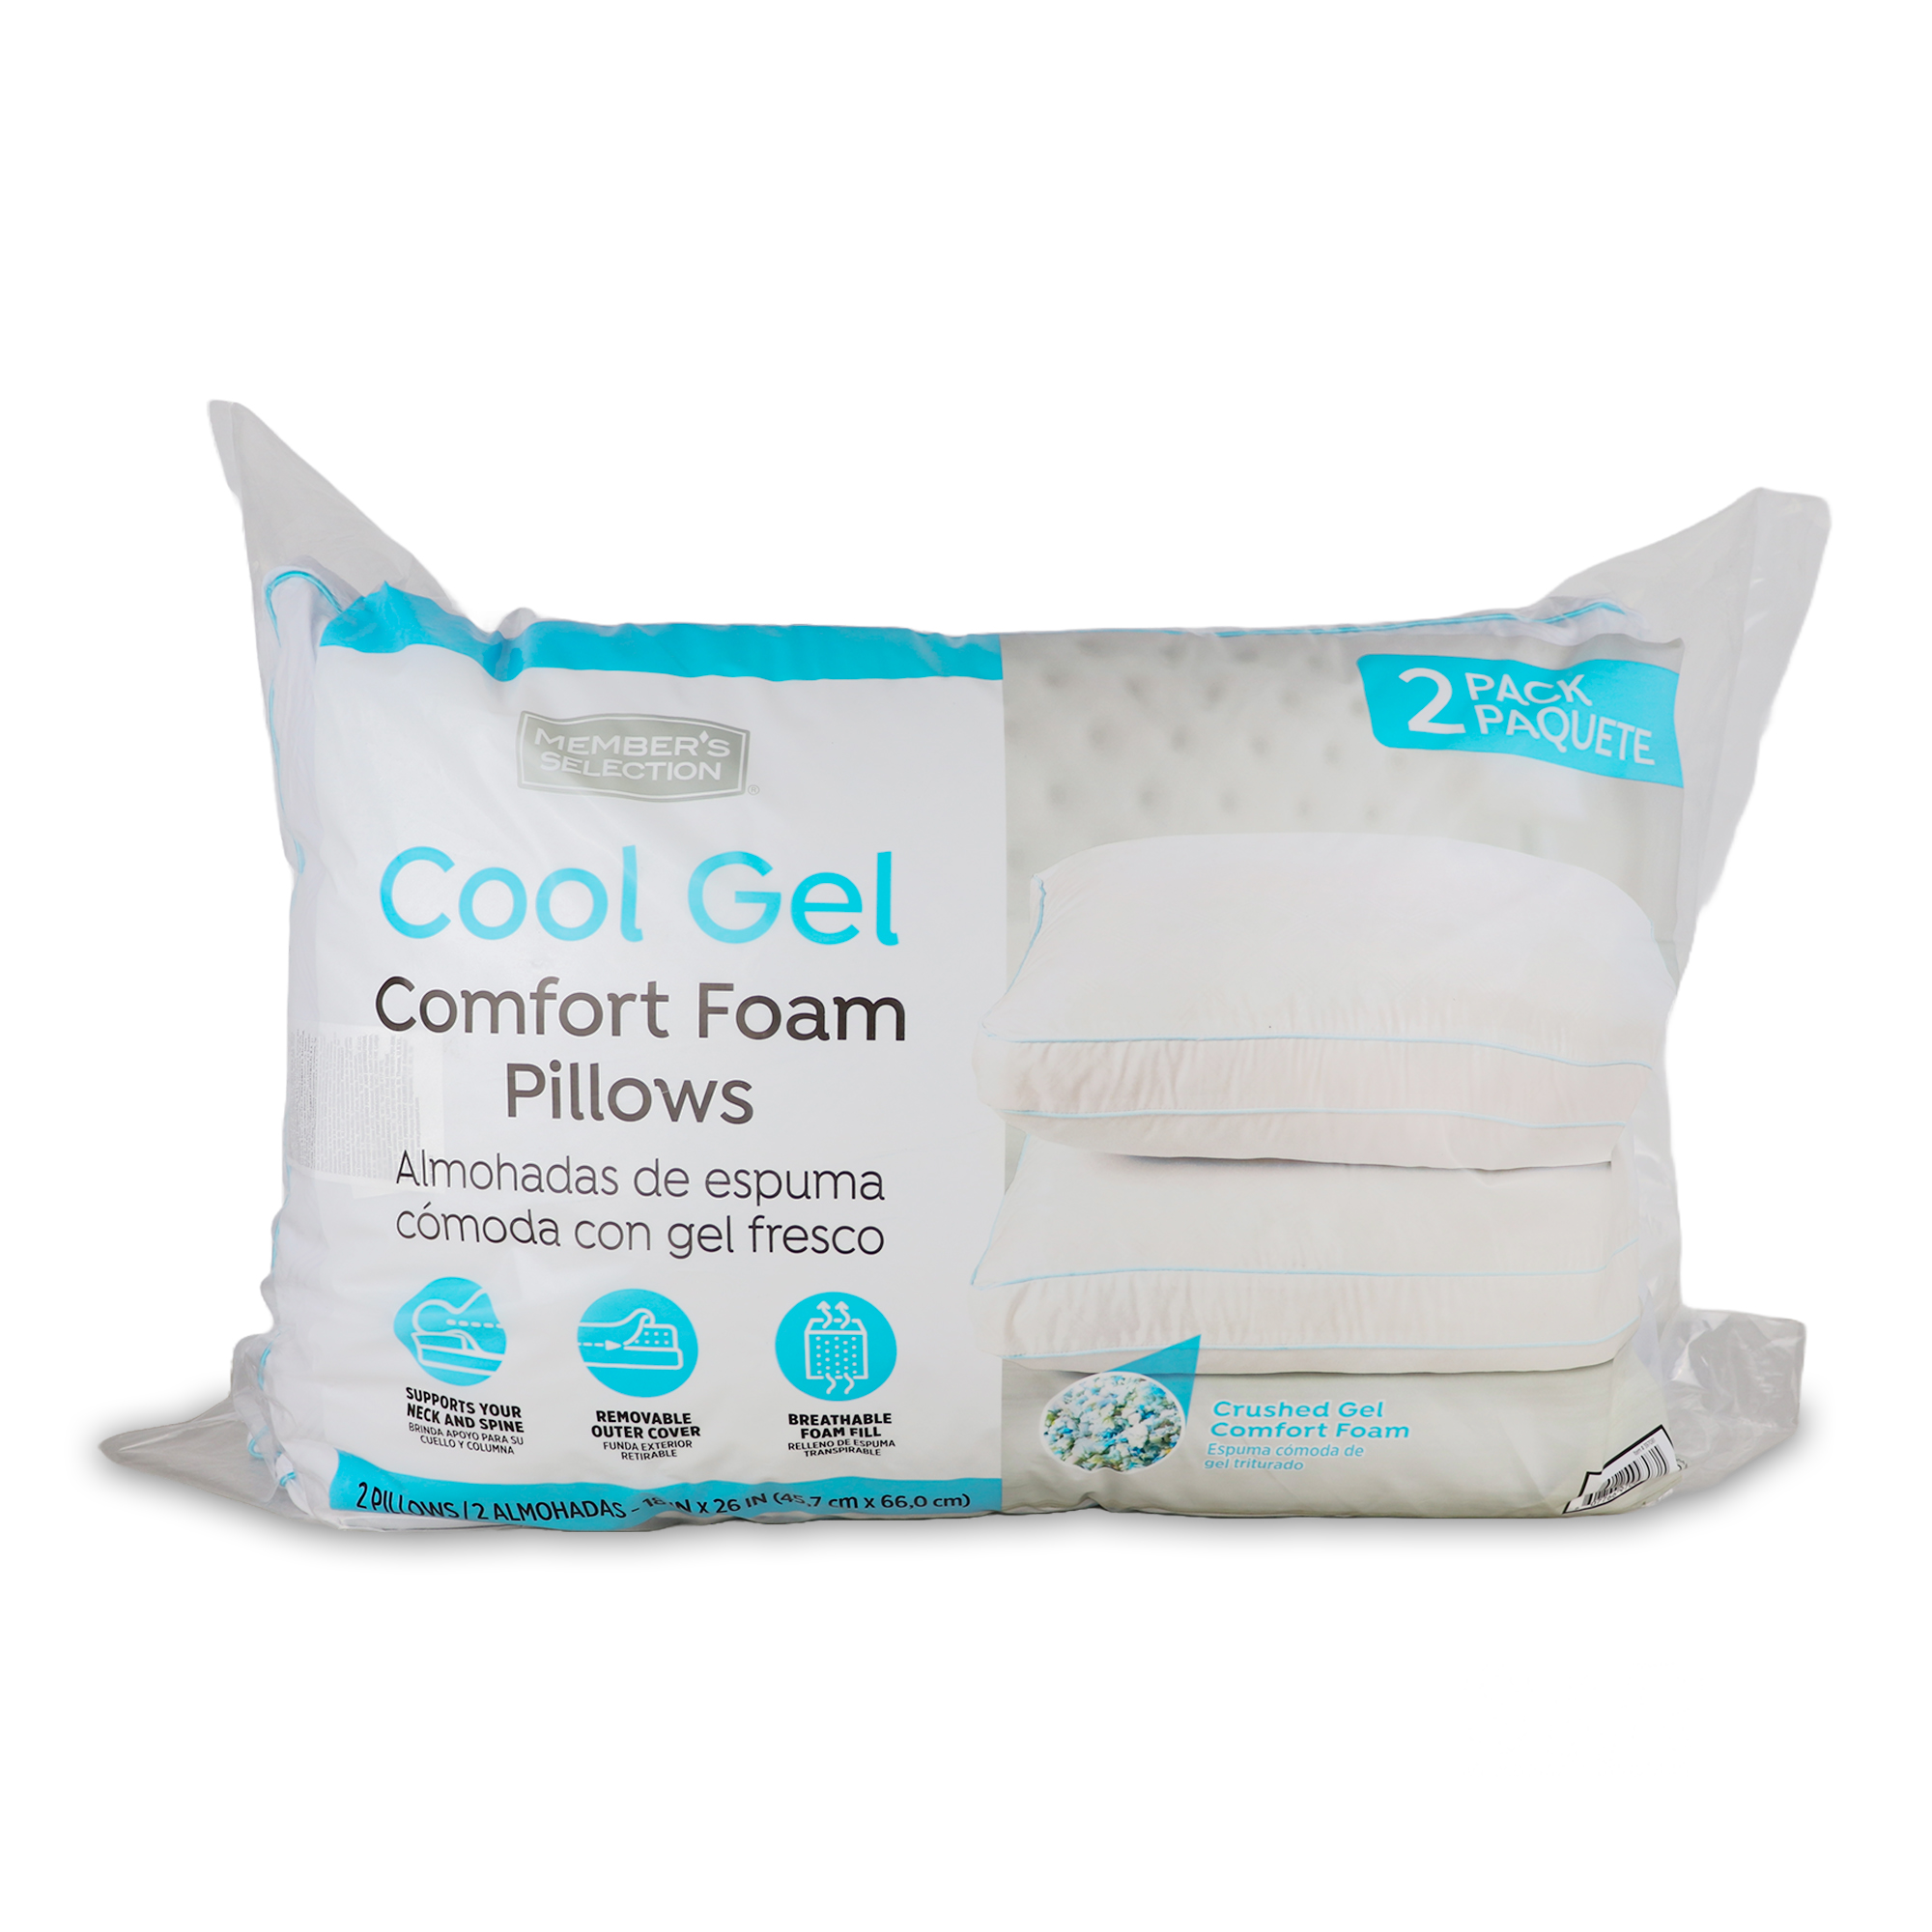 Member's Selection Cool Gel Comfort Foam Pillows 2pcs